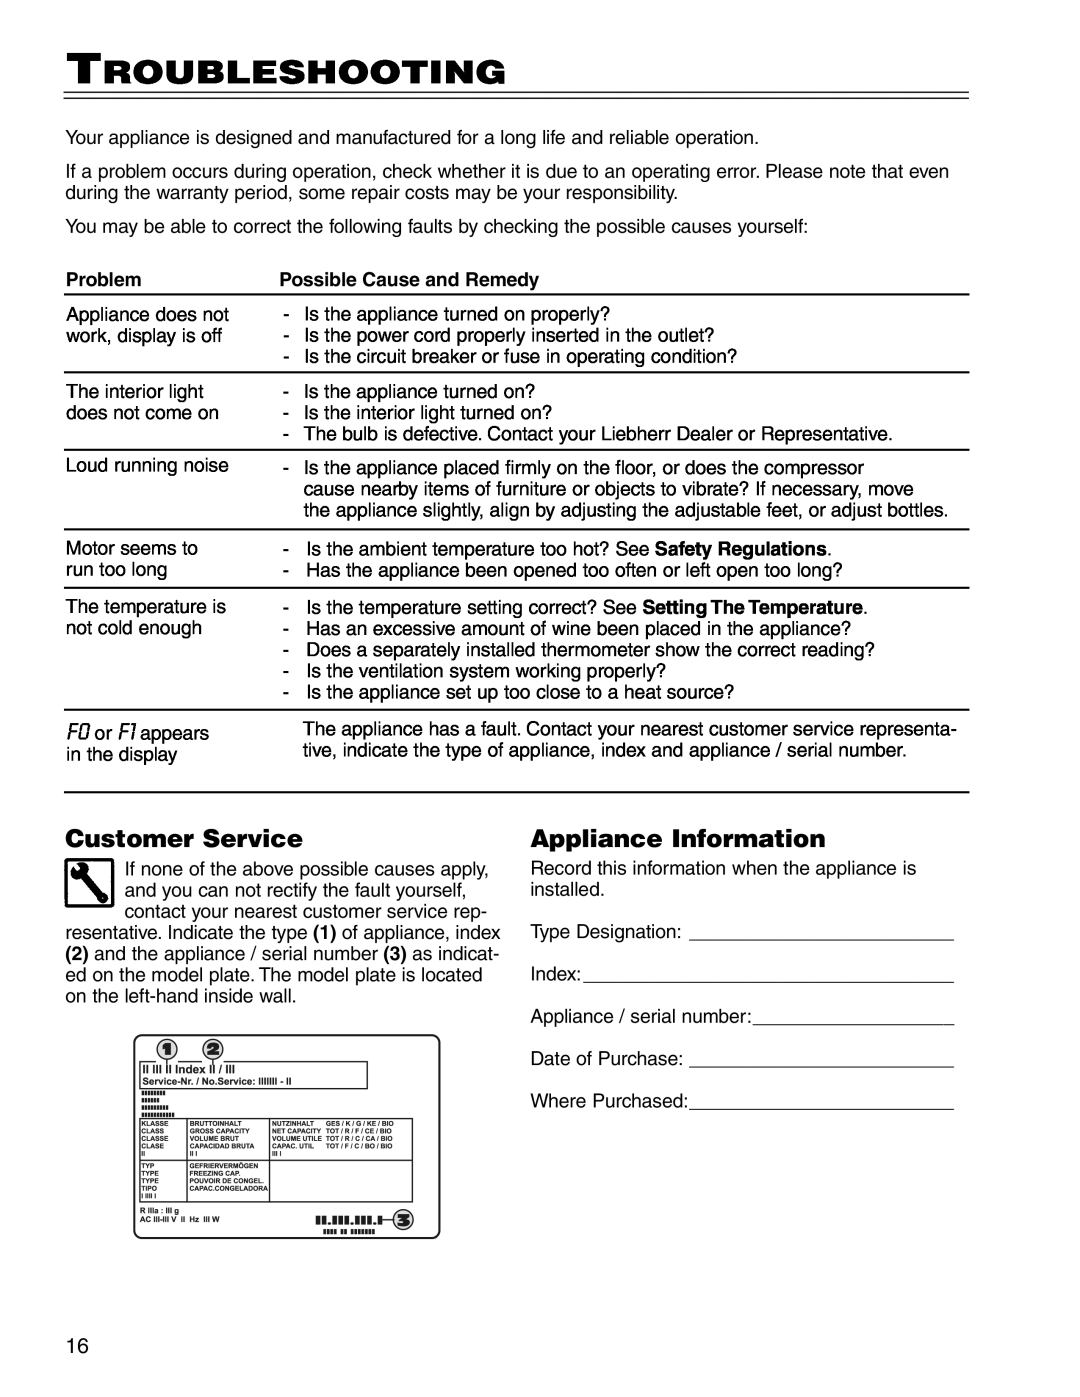 Liebherr WS 40 manuel dutilisation Troubleshooting, Customer Service, Appliance Information 